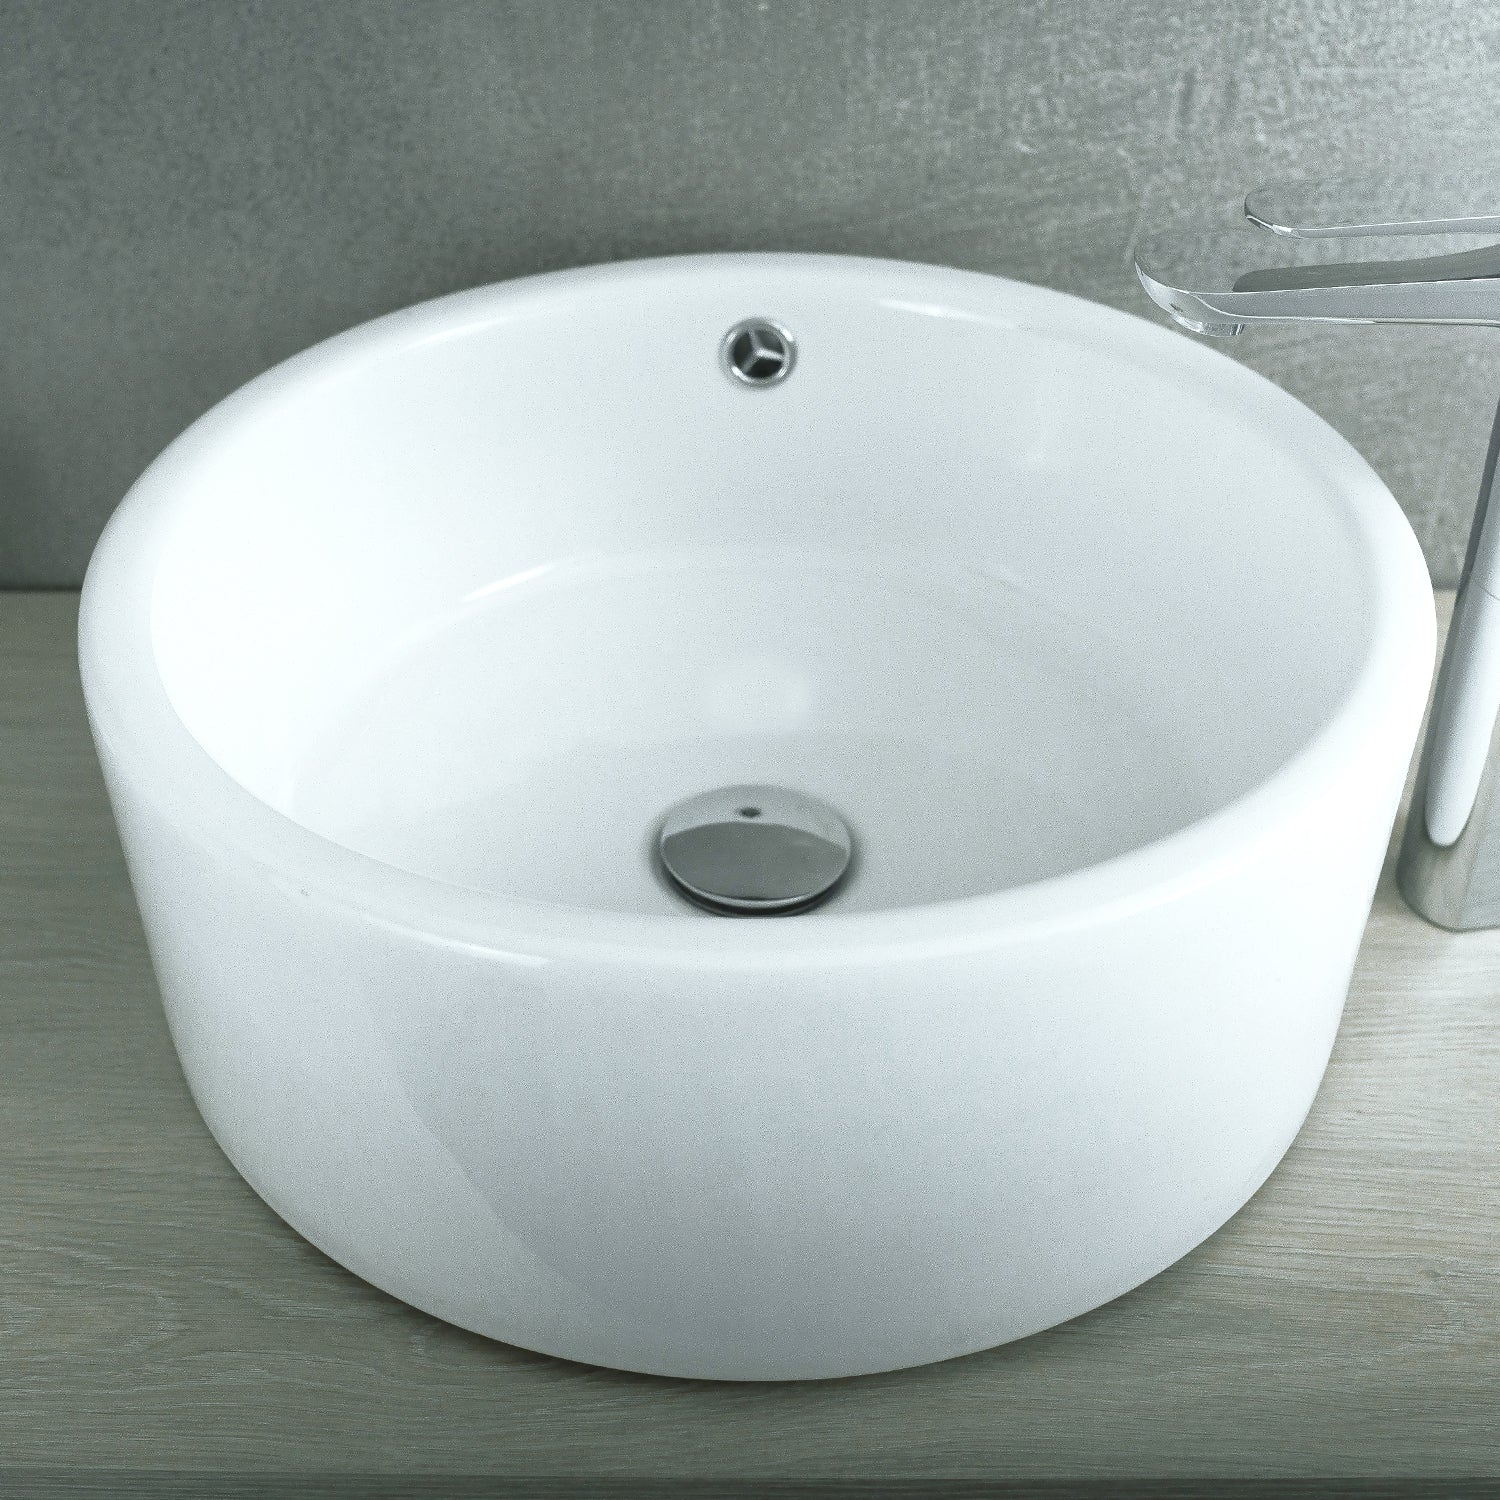 DAX Ceramic Round Single Bowl Bathroom Vessel Sink, White Finish, ?ò 16-1/2 x 4-1/2 Inches (BSN-218)